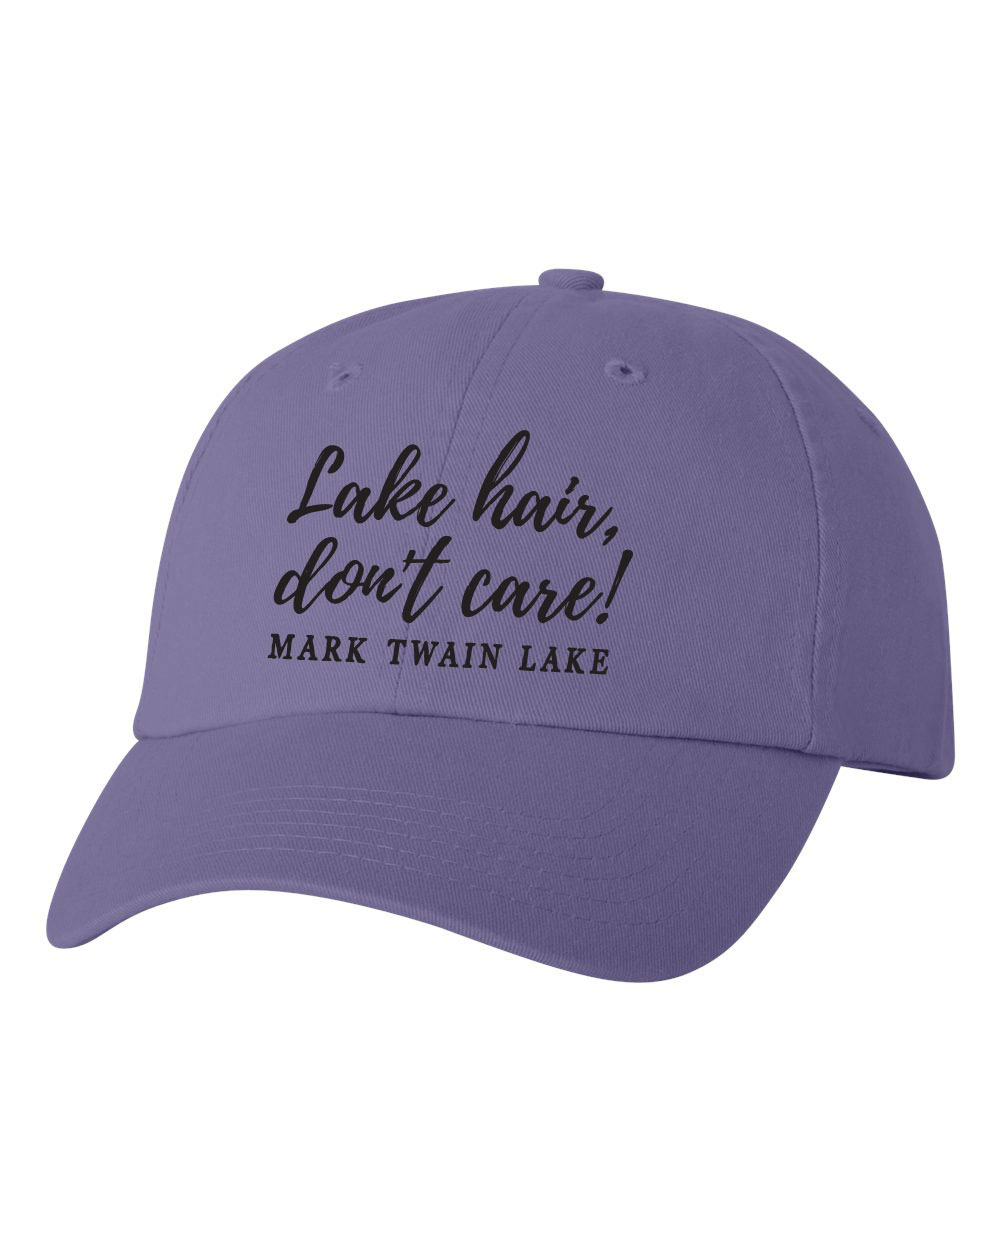 Lake hair, don't care MTL